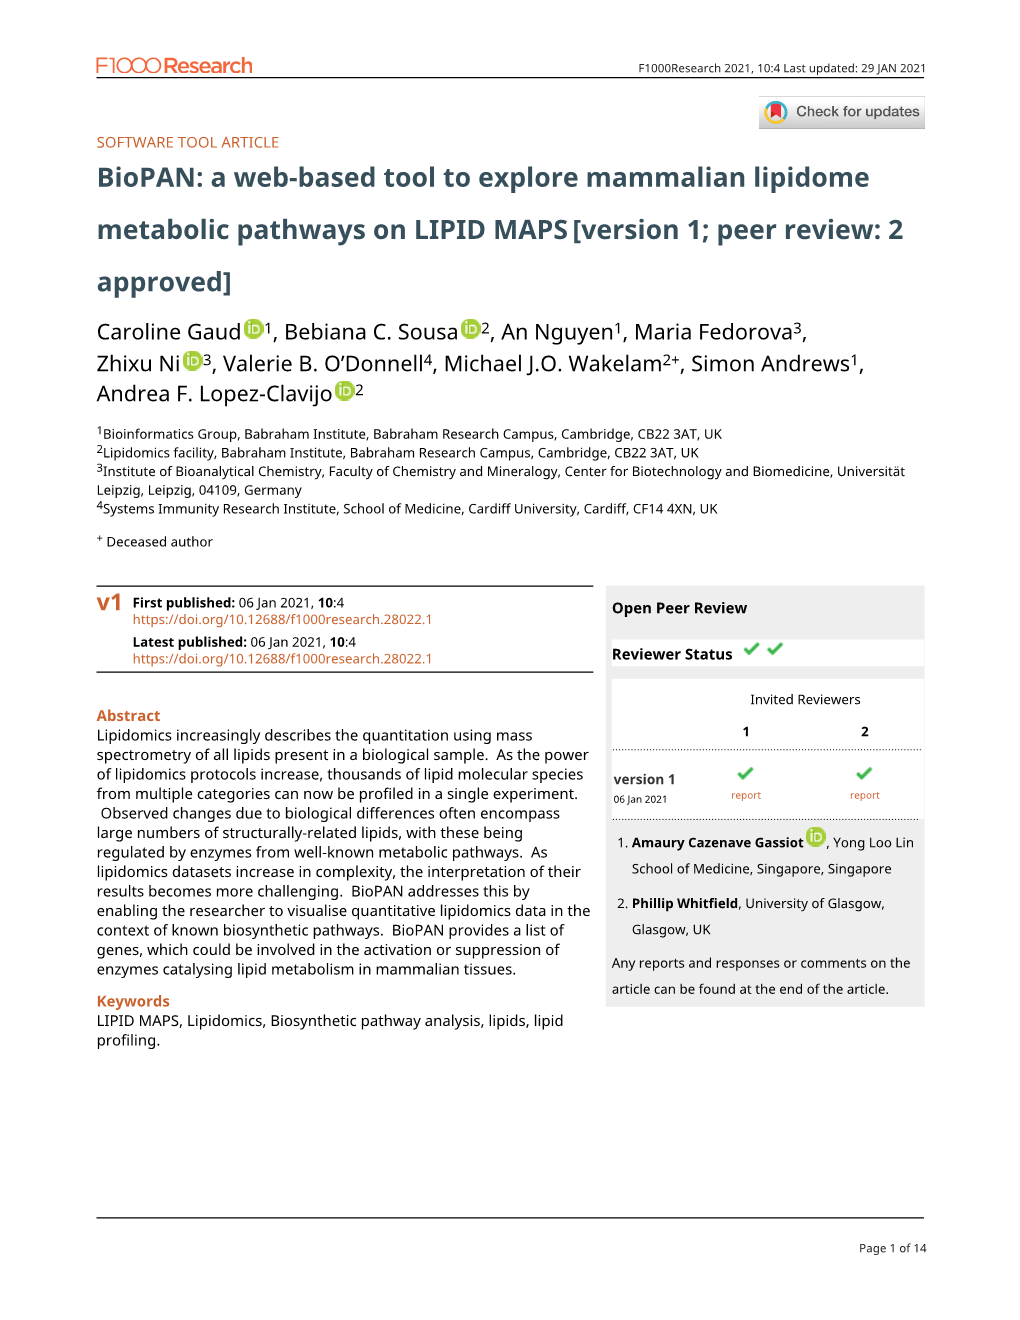 Biopan: a Web-Based Tool to Explore Mammalian Lipidome Metabolic Pathways on LIPID MAPS[Version 1; Peer Review: 2 Approved]